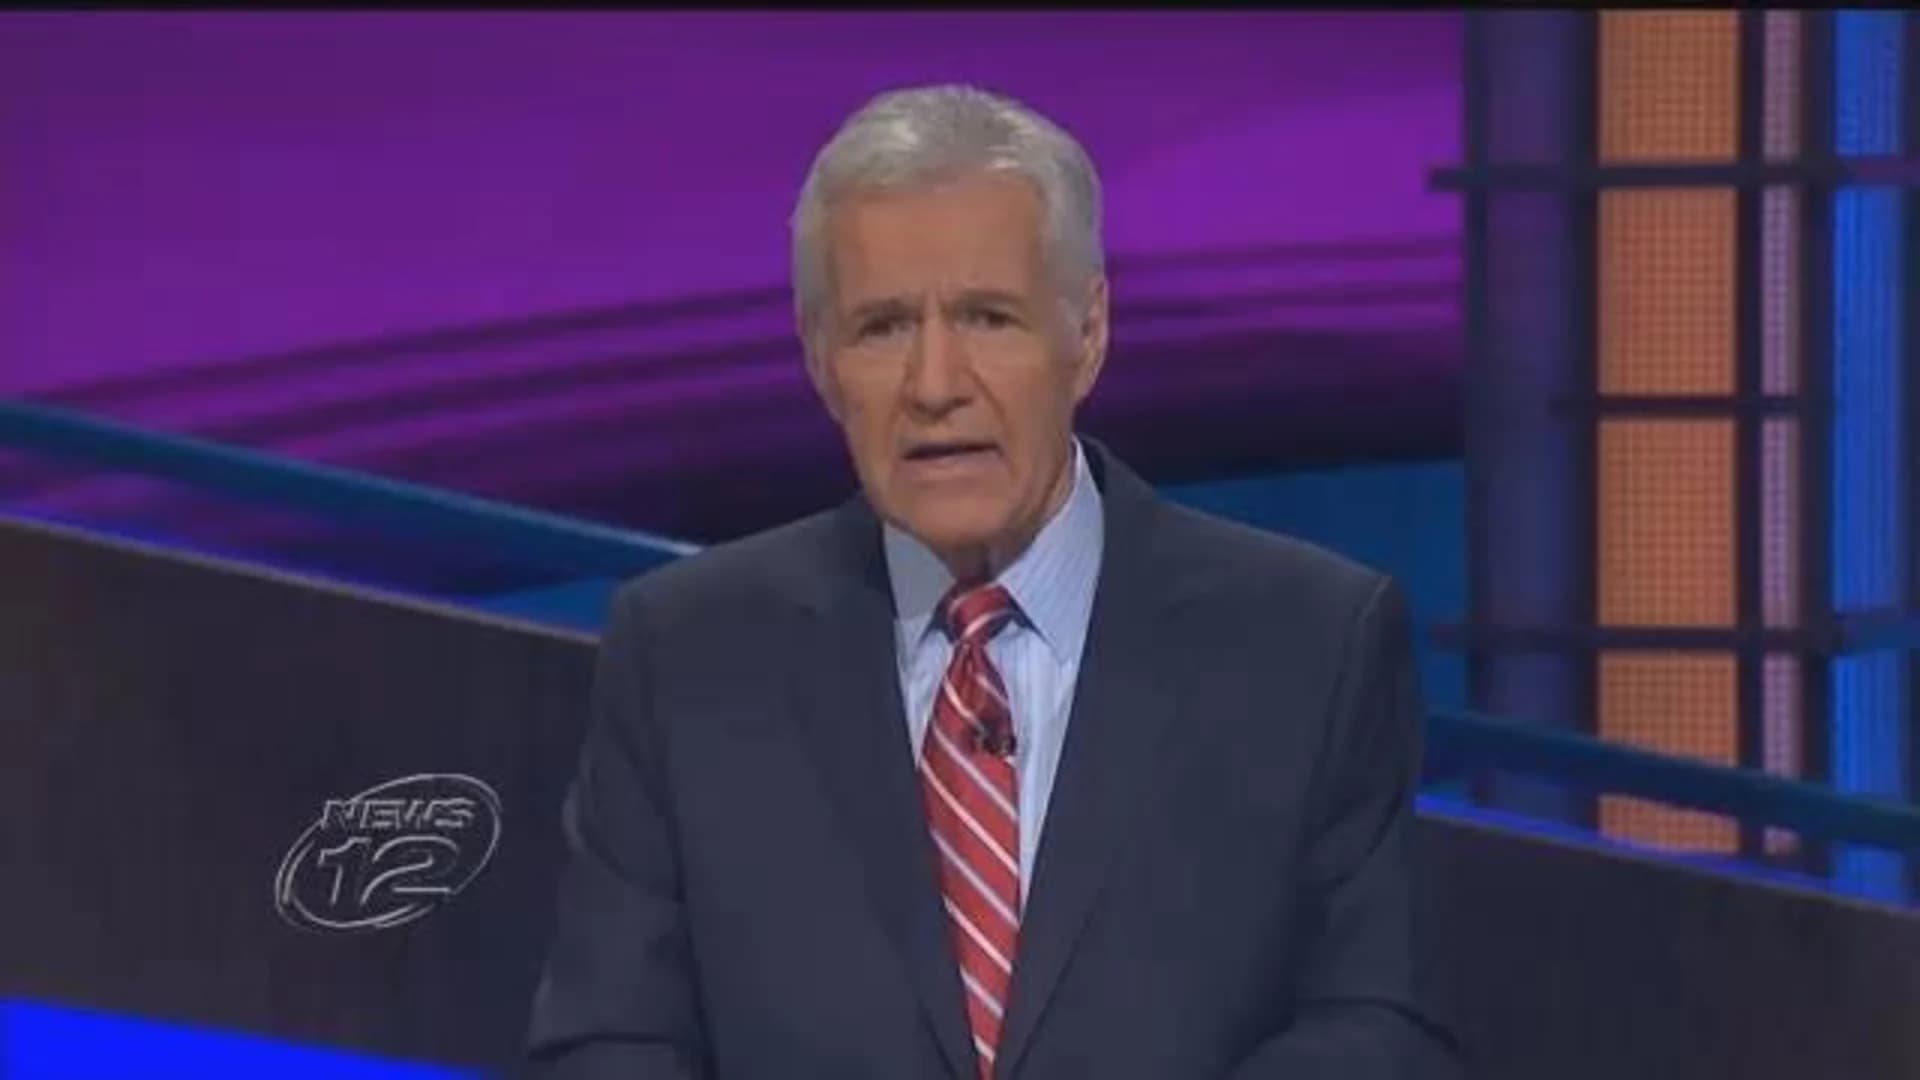 'Jeopardy!' host Alex Trebek says he has pancreatic cancer